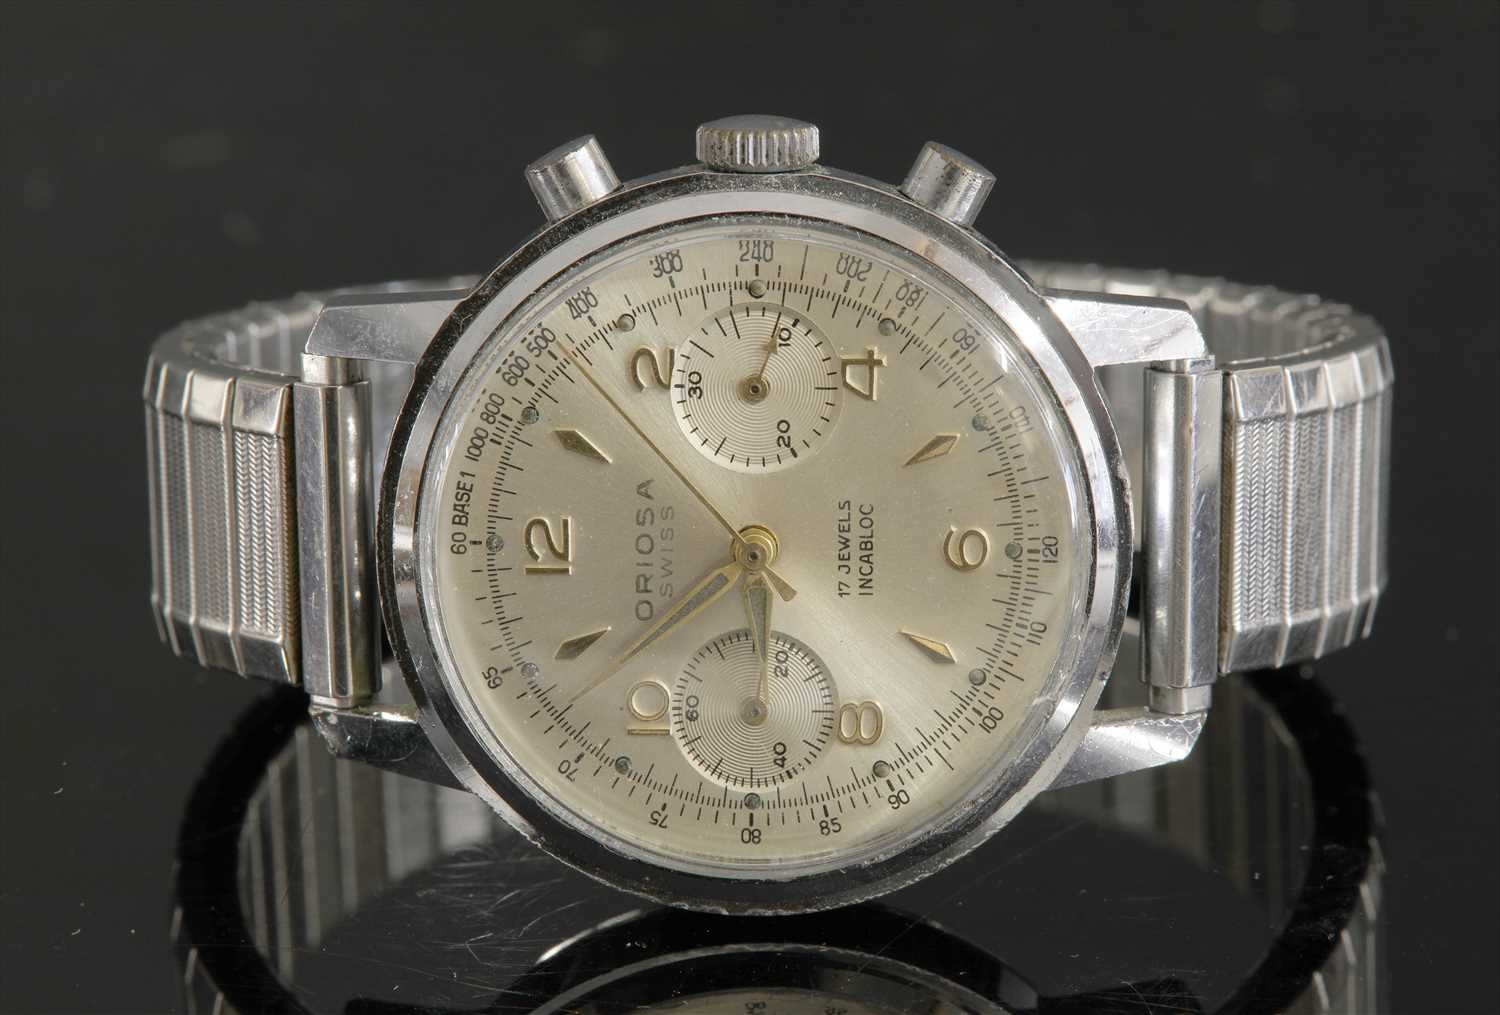 Lot 365 - A gentlemen's stainless steel Oriosa mechanical chronograph strap watch